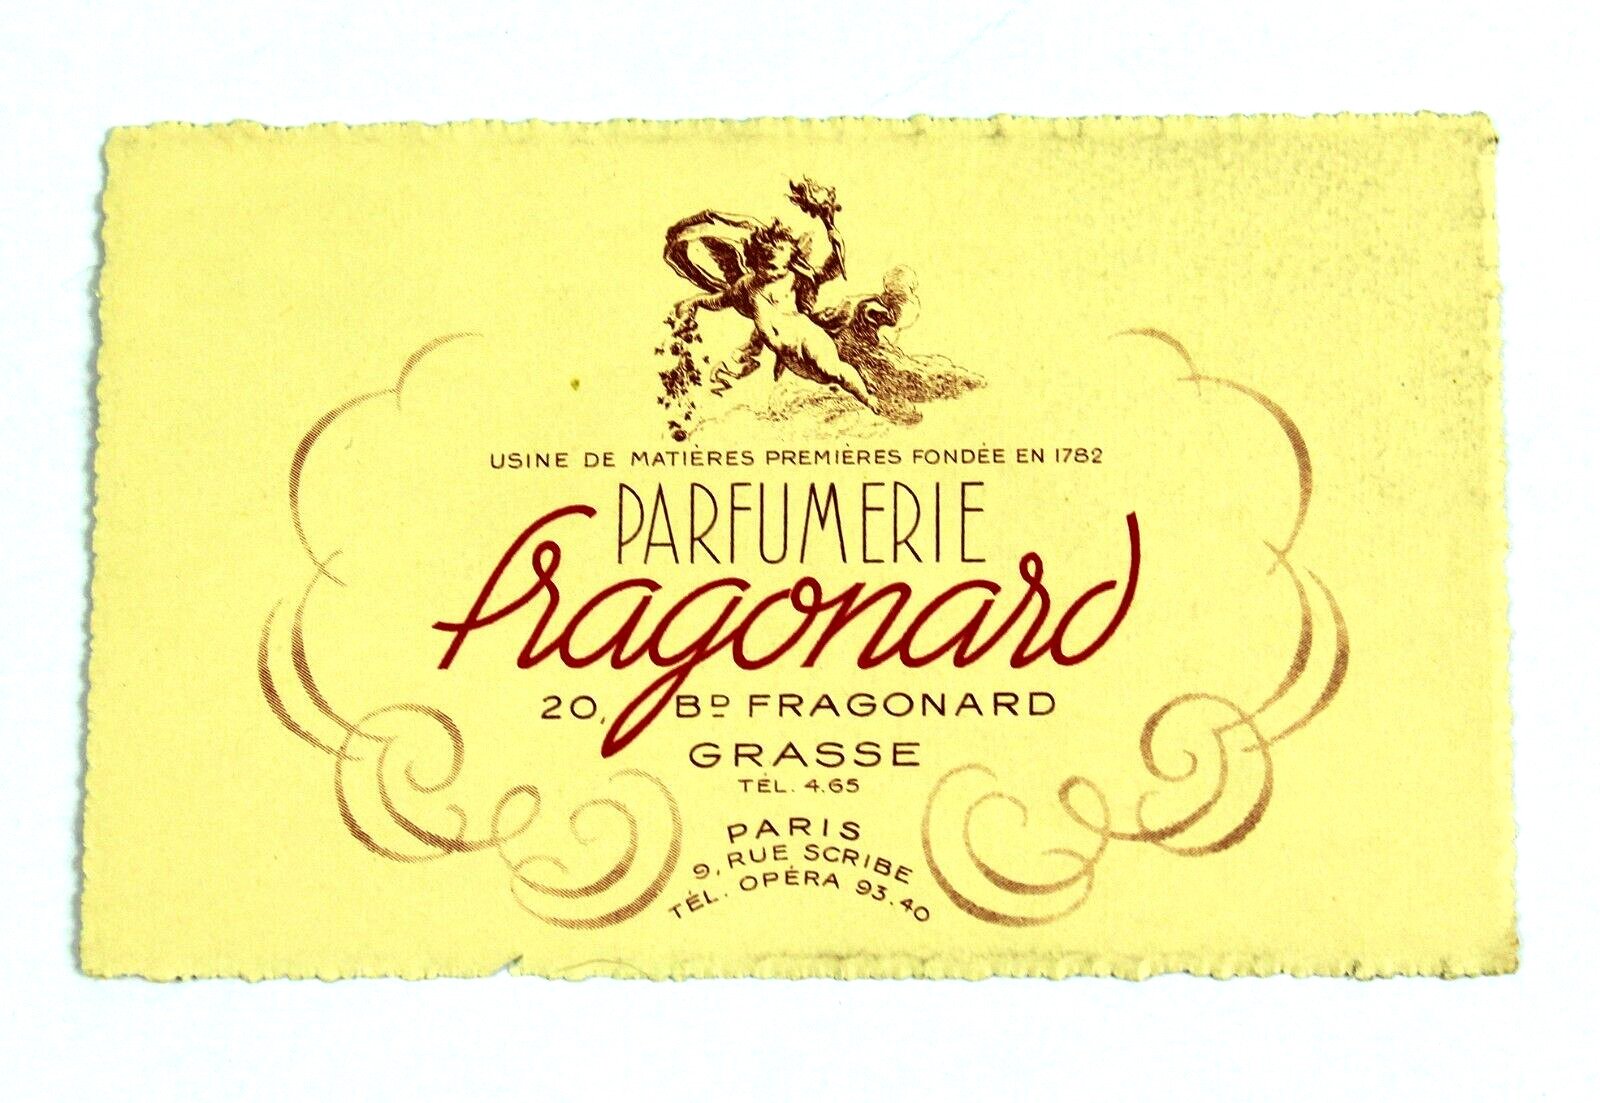 Vtg PARFUMERIE FRAGONARD Perfume Card GRASSE PARIS French Perfume Advertising